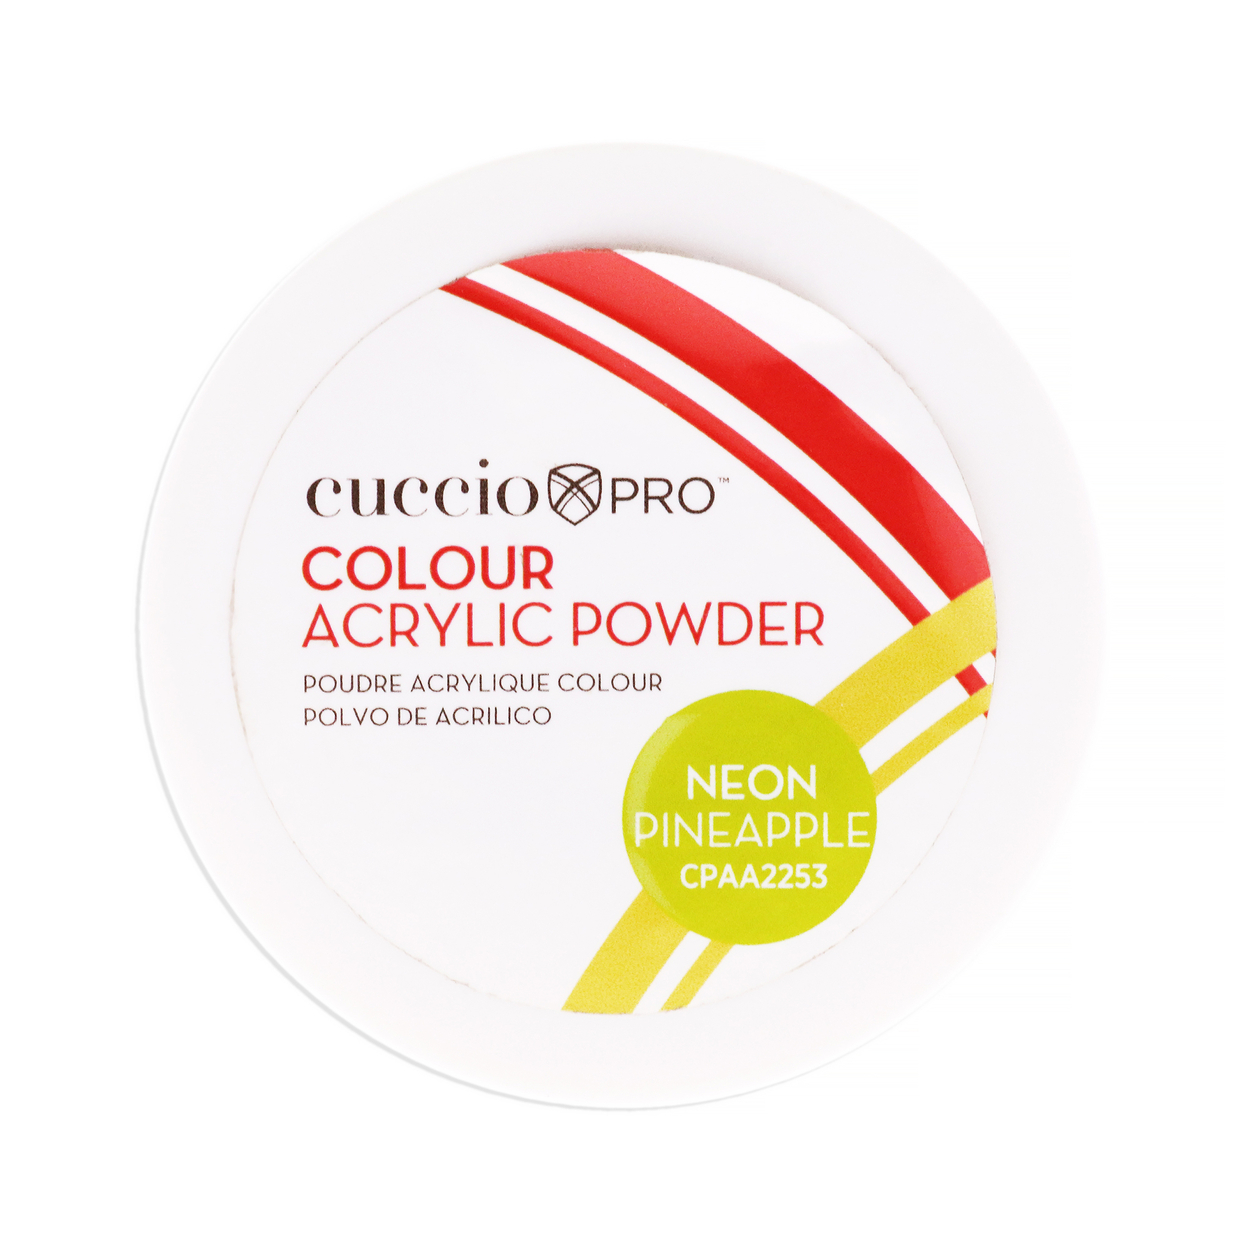 Cuccio PRO Colour Acrylic Powder - Neon Pineapple 1.6 Oz